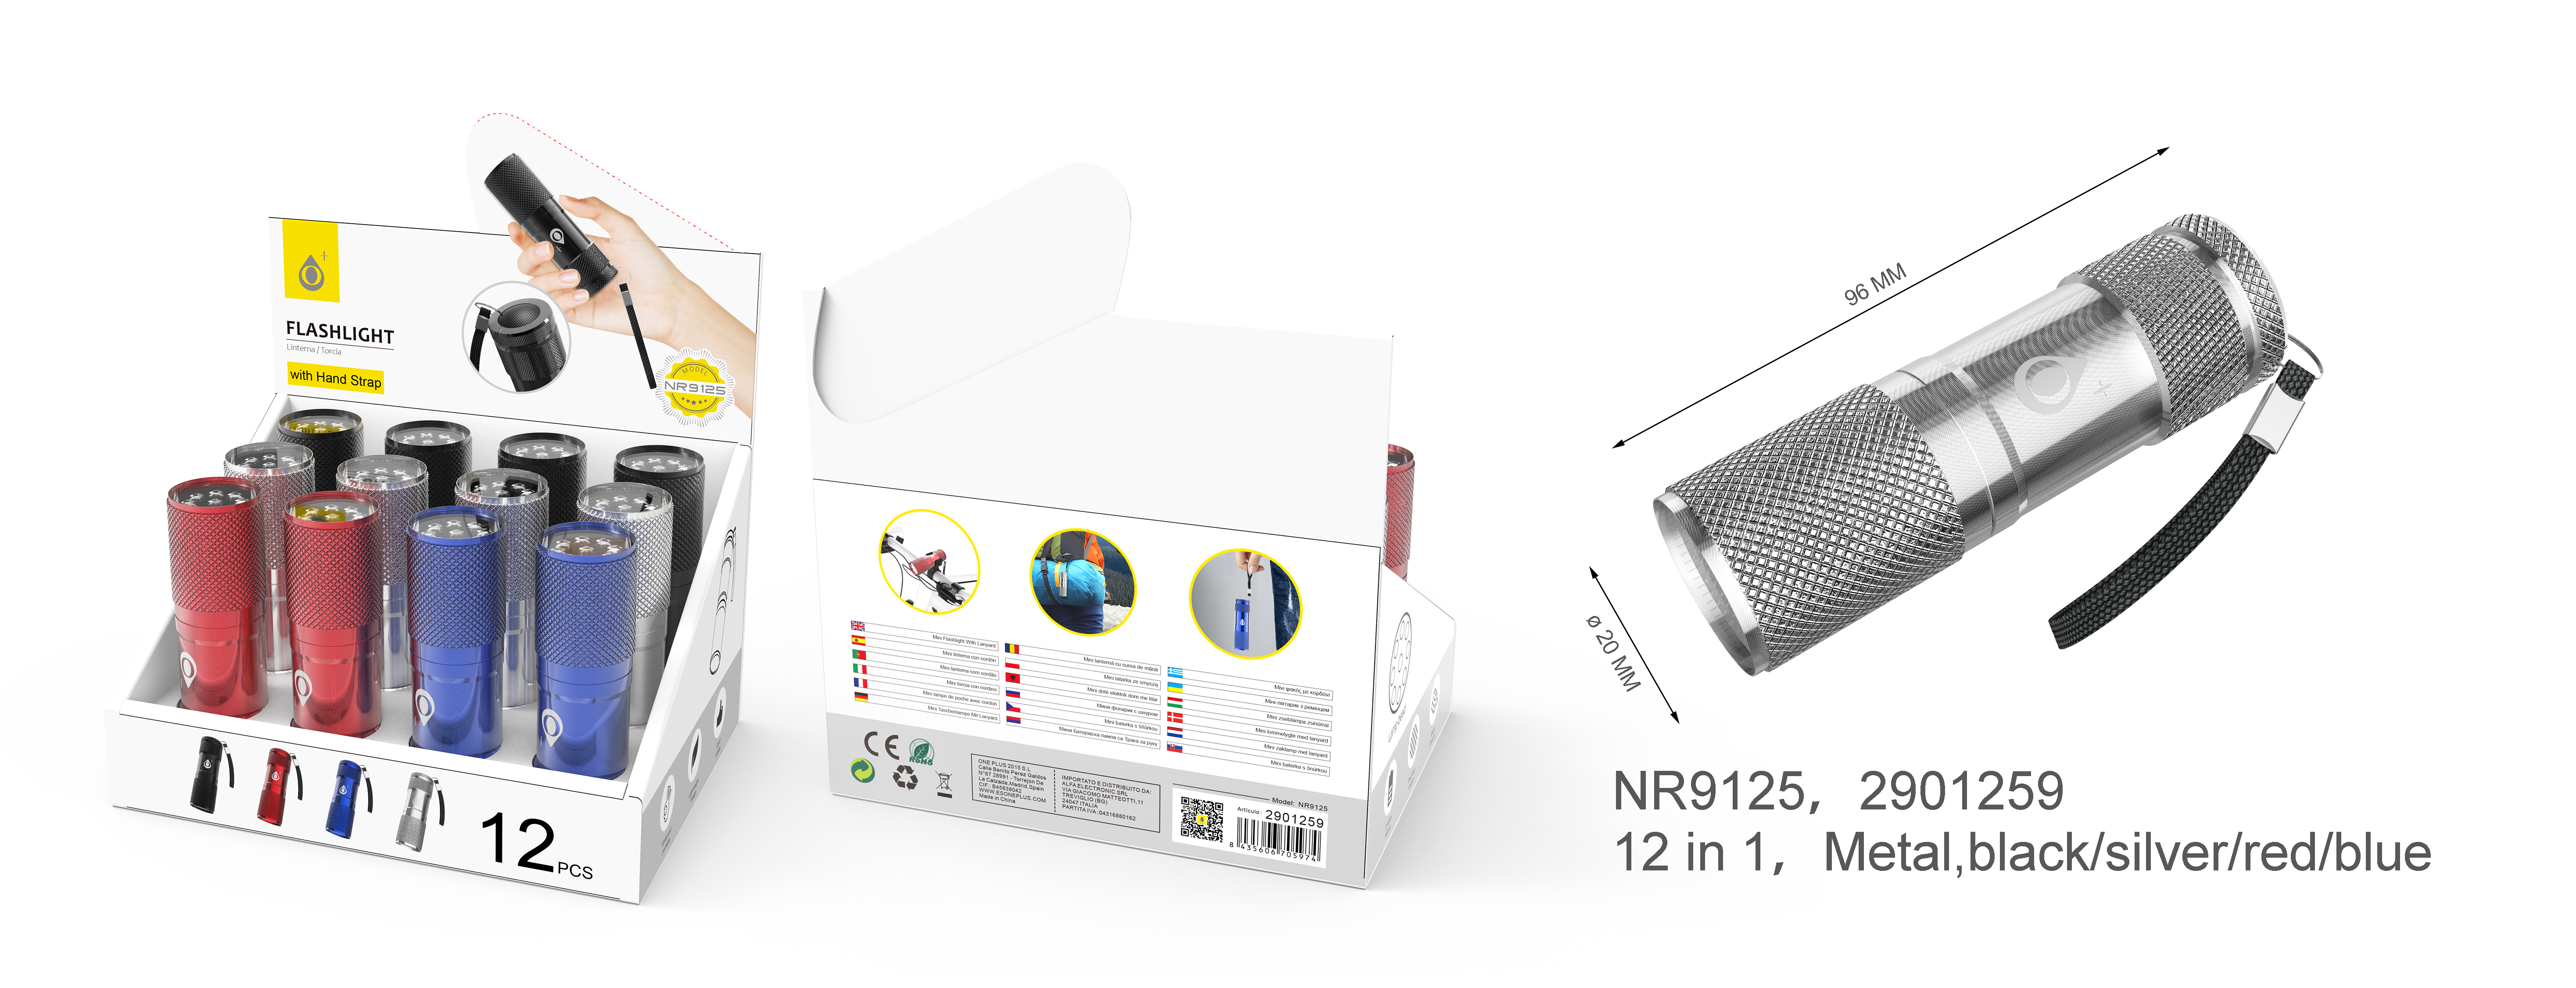 NR9125 MAXI Linterna Portatil LED Con Correa Para Muñeca,4 Colores,12 Unidades/Caja (Solo Venta por caja)